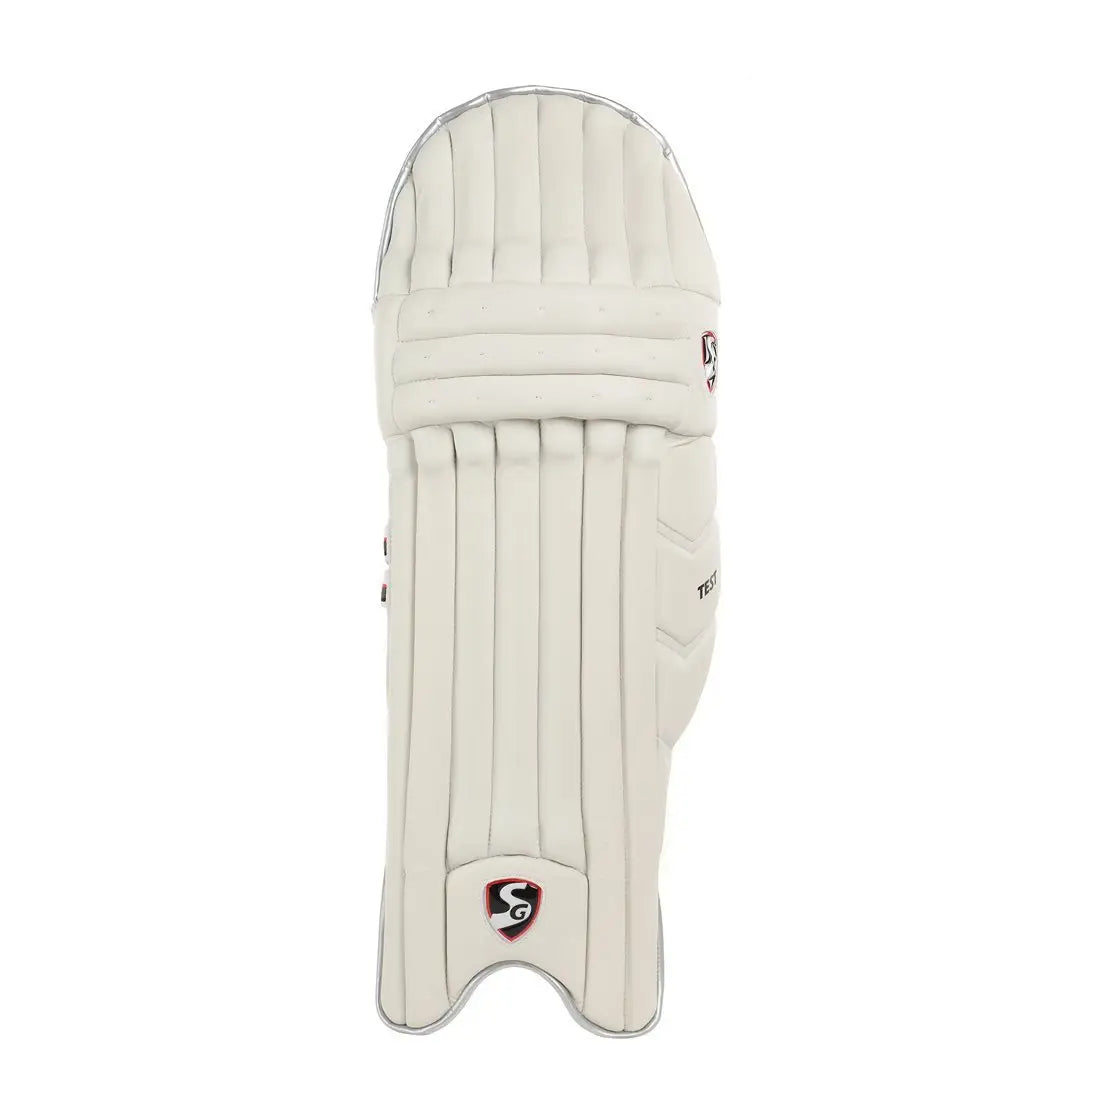 SG Test Cricket Batting Pads Leg-guard Premium Quality - PADS - BATTING